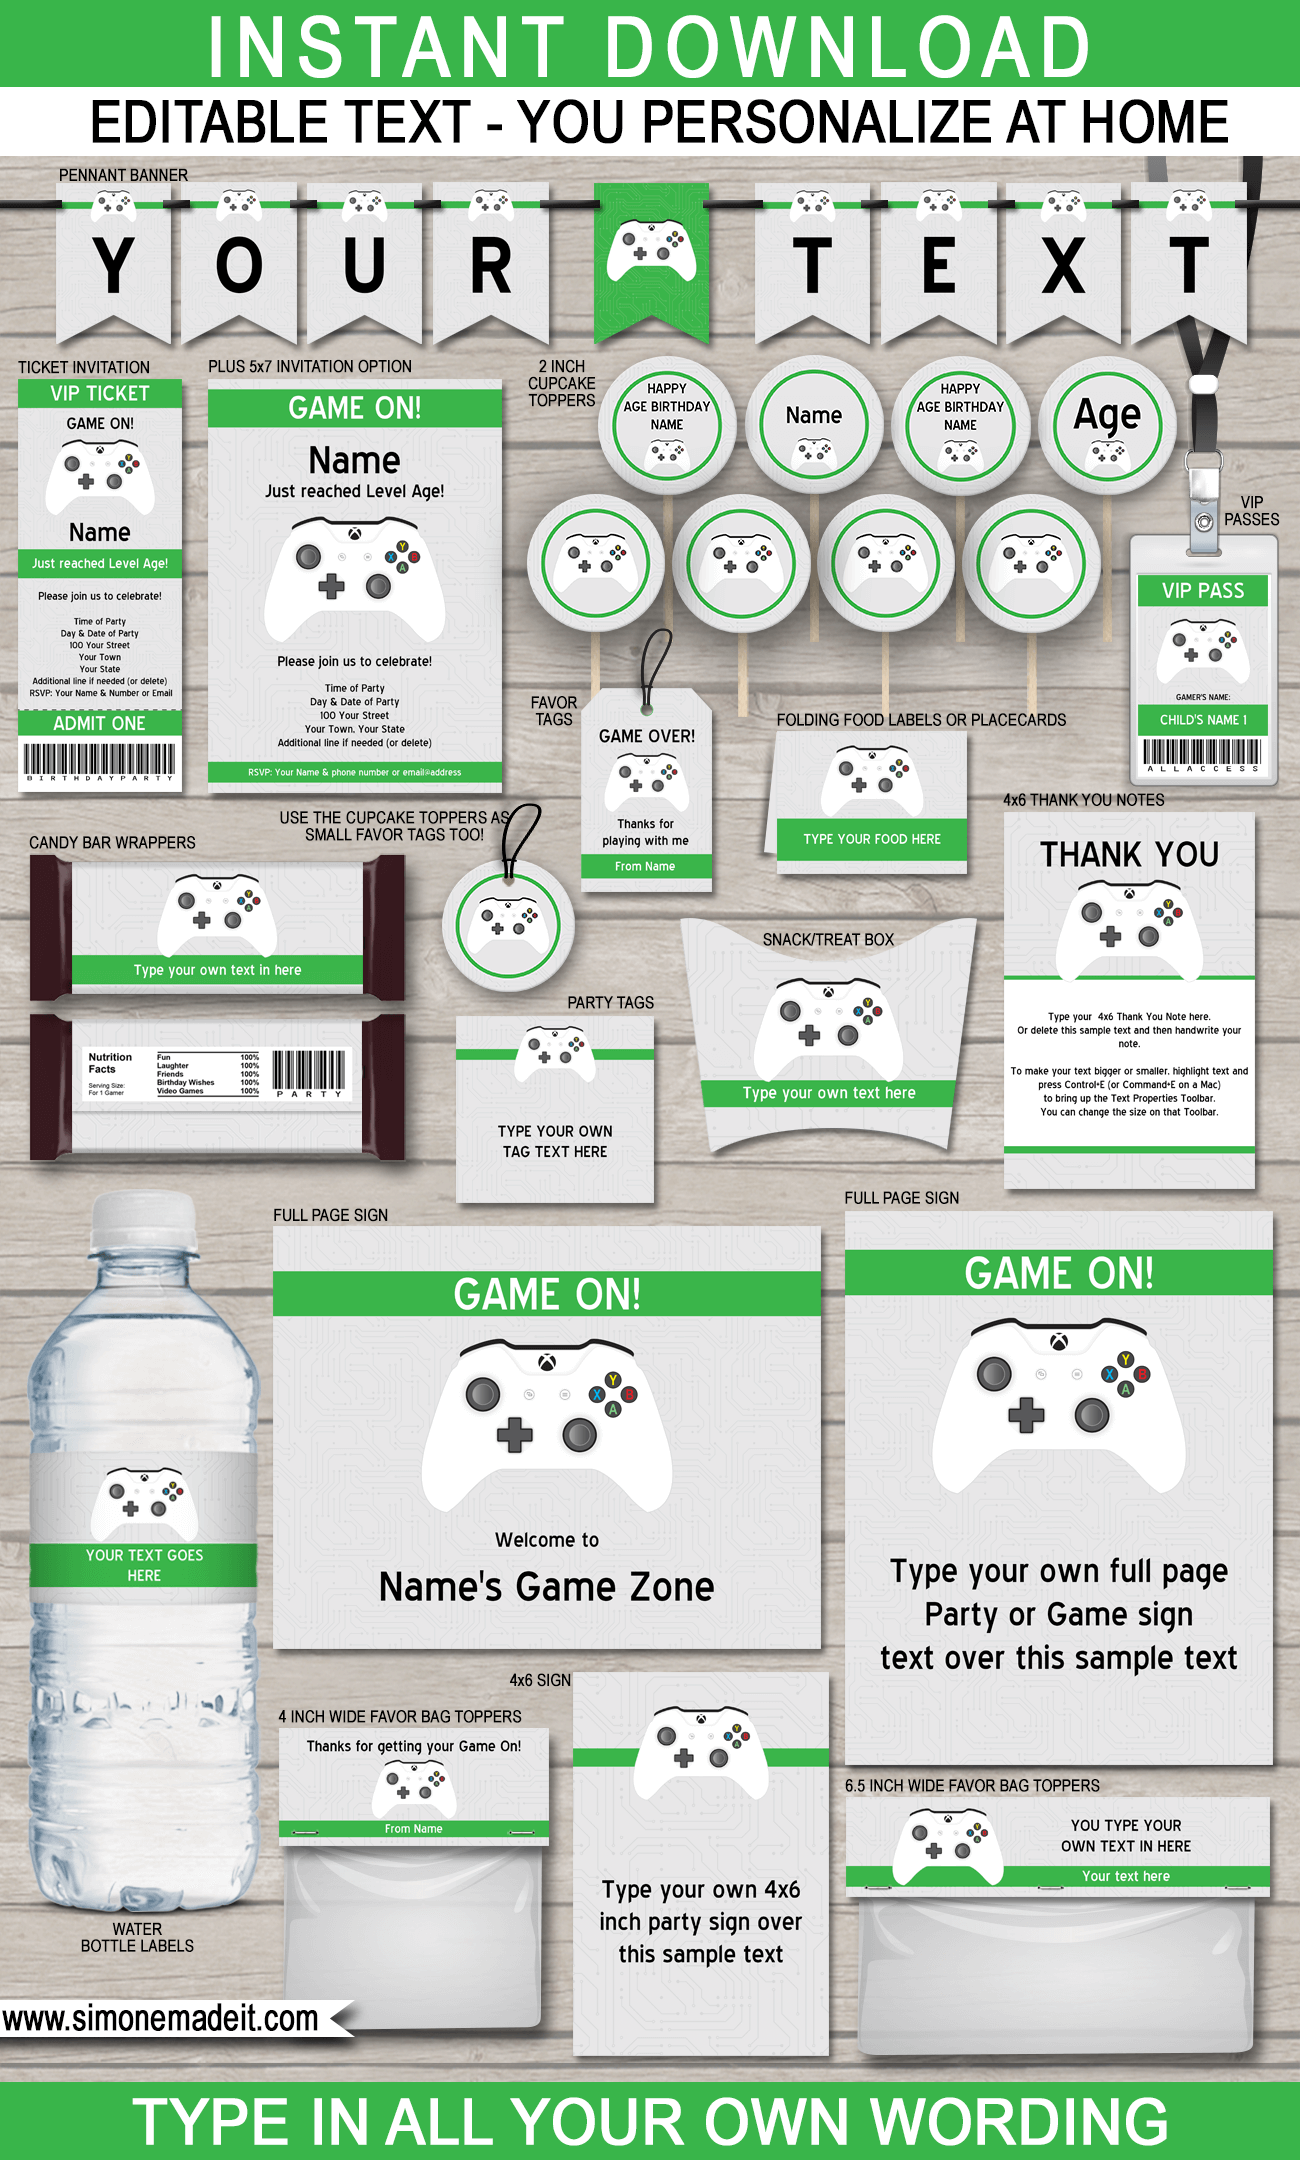 Printable Xbox Birthday Party Invitations & Decorations - Video Game Birthday Party Themes - Editable & Printable templates - INSTANT DOWNLOAD via simonemadeit.com